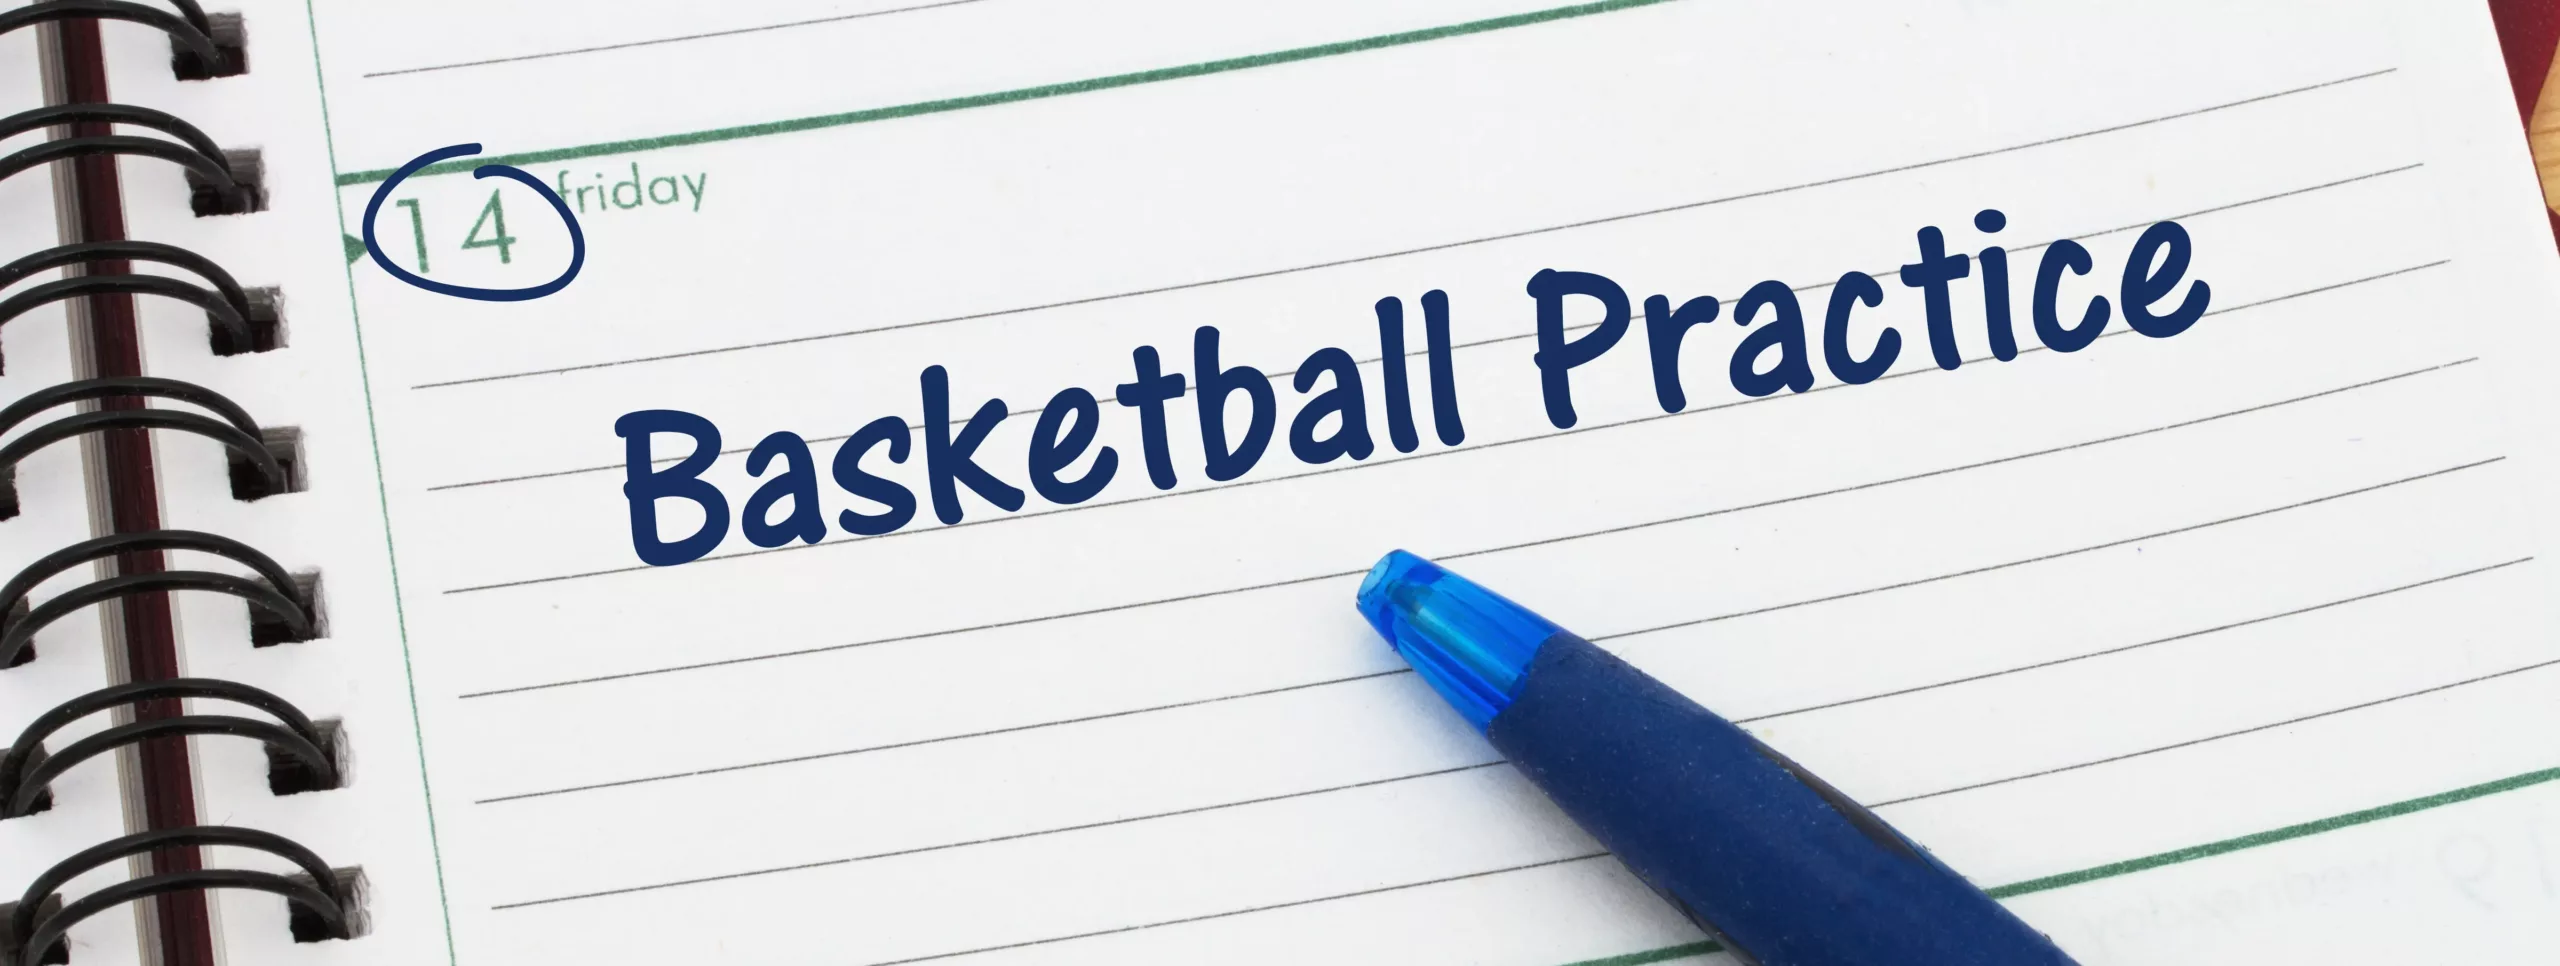 Basketball practice written on a date in planner.